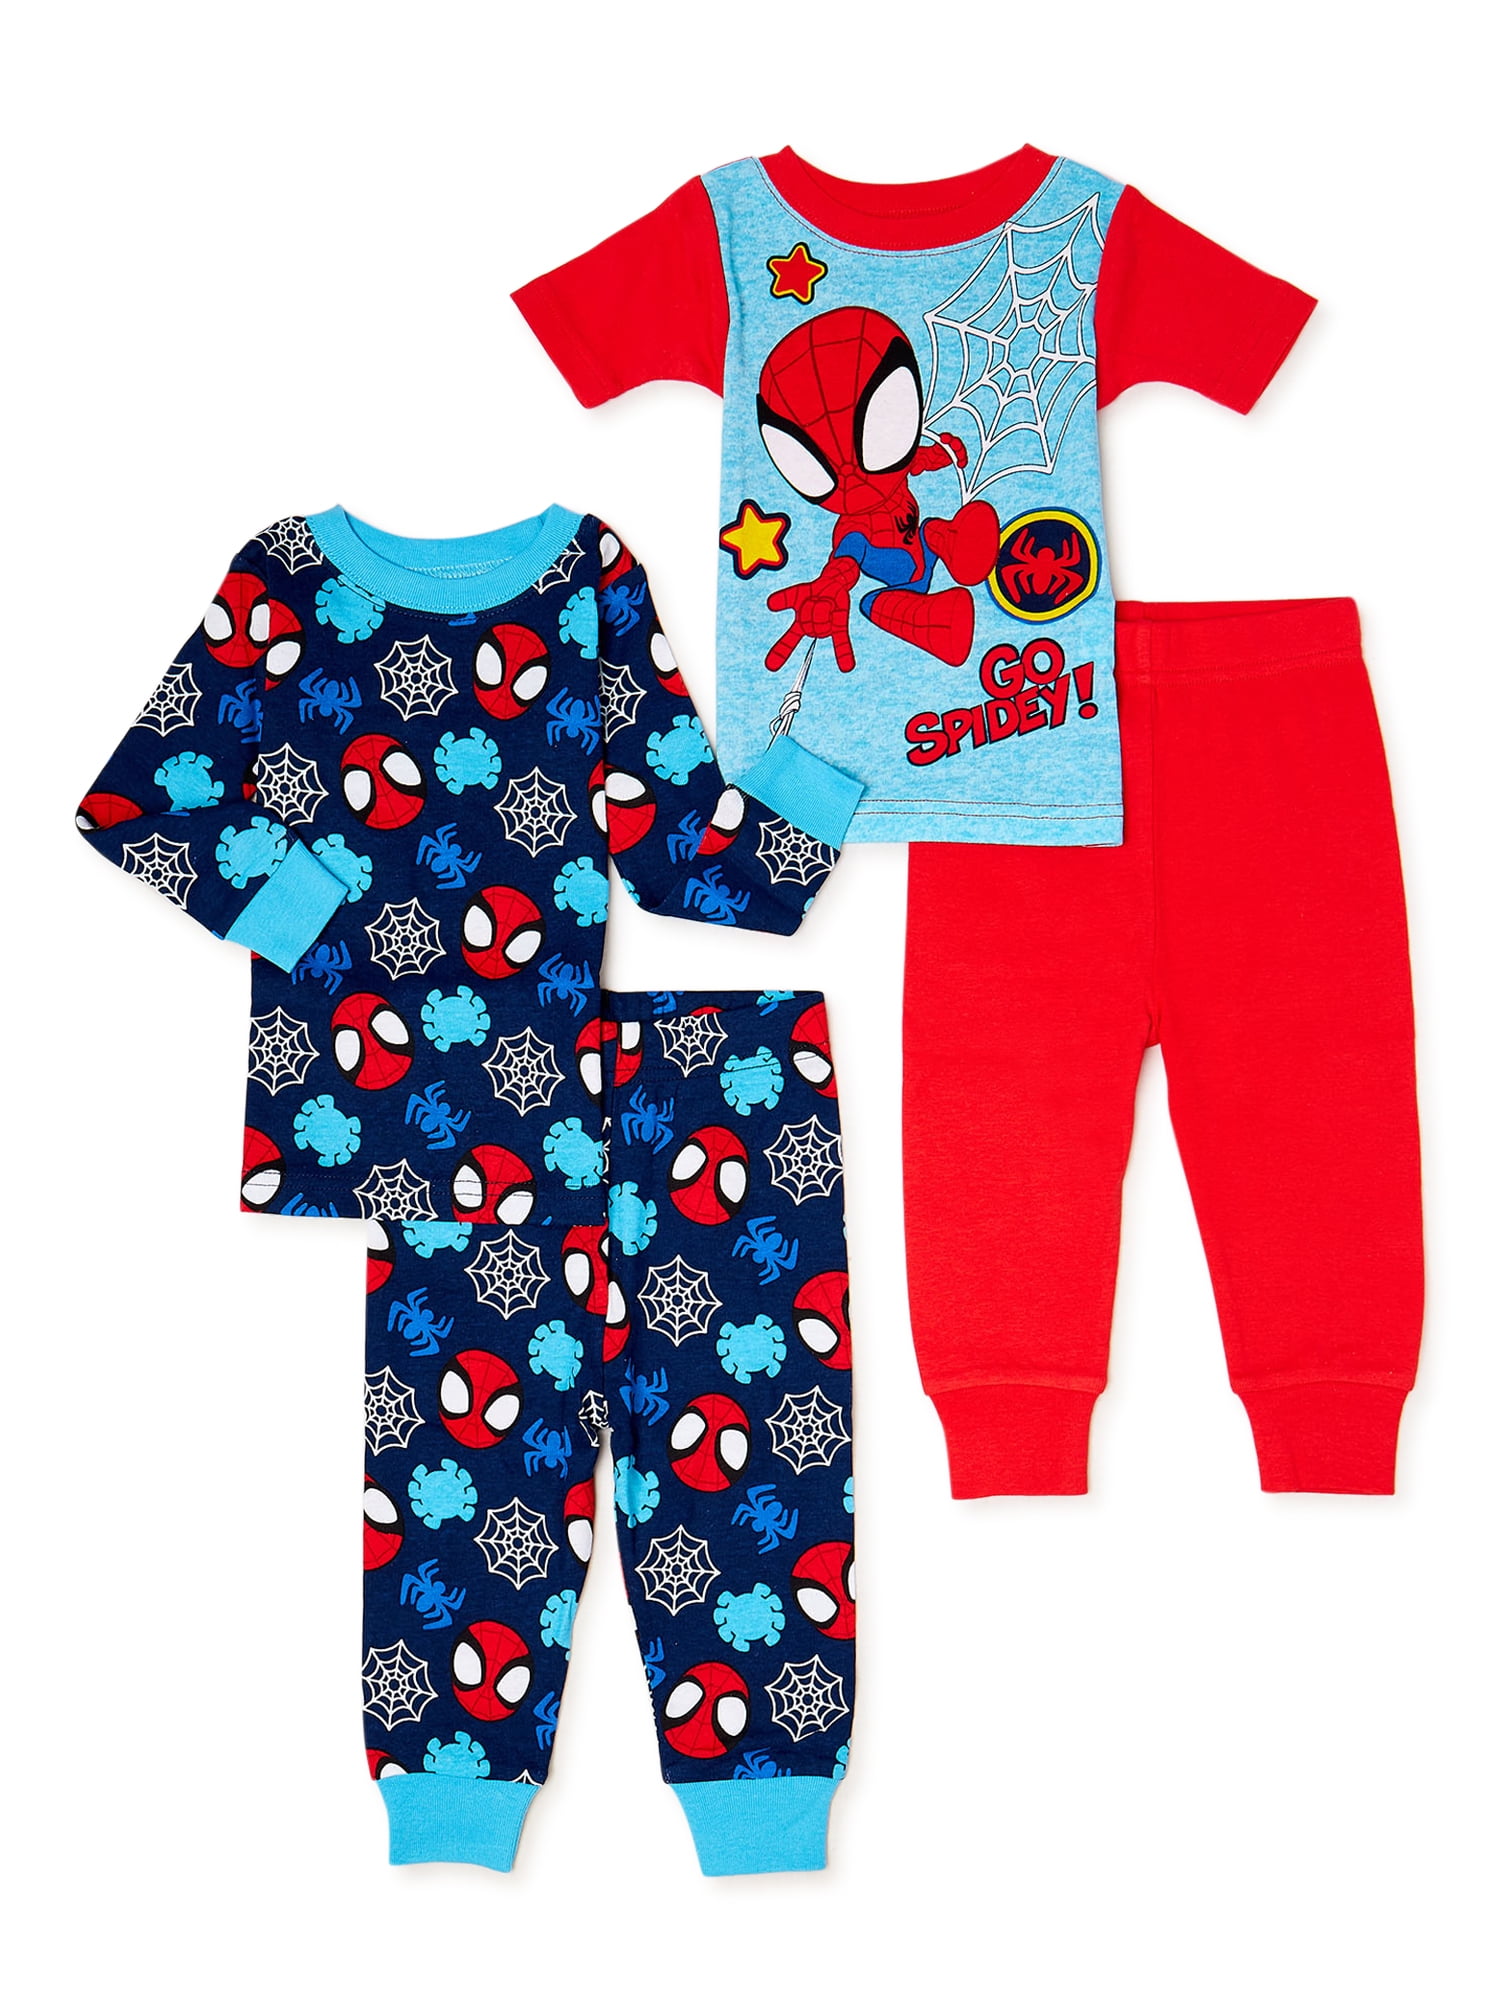 Character Short & Long Sleeve Pyjama Sets Nightwear Pjs Kids Boys 6 Months to 12 Years